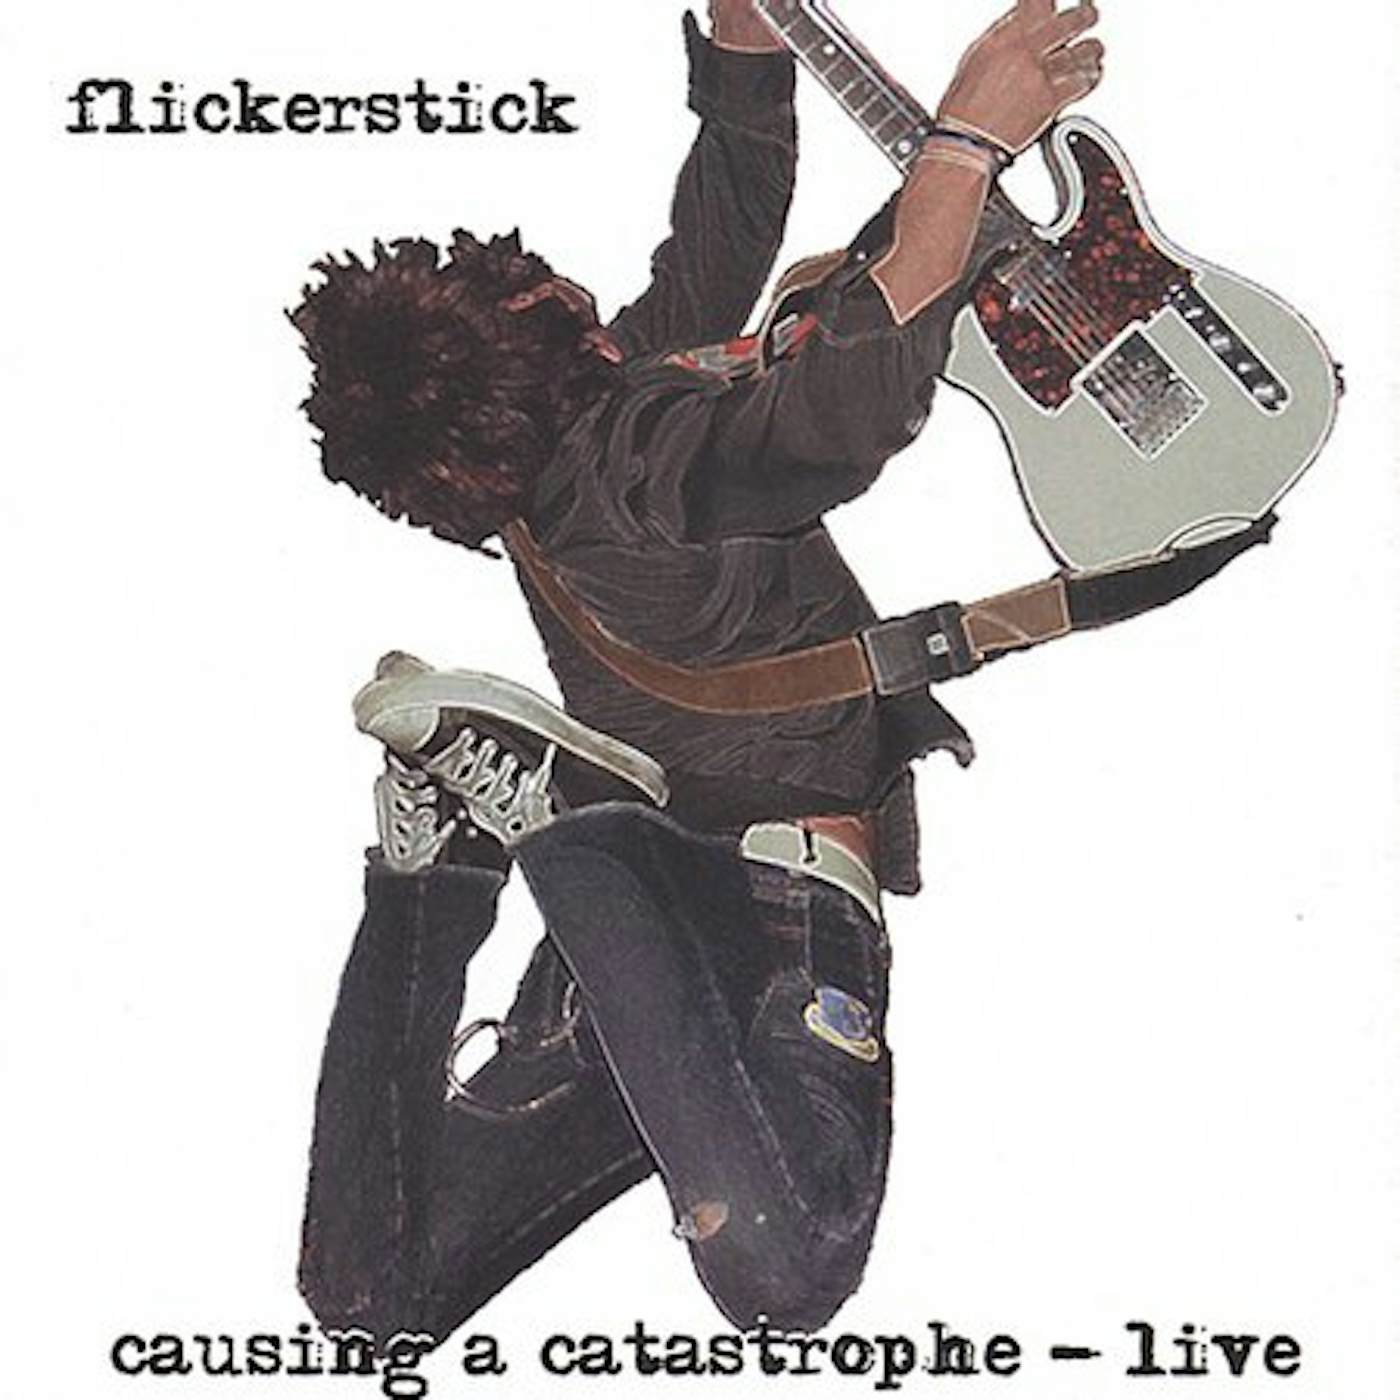 Flickerstick CAUSING A CATASTOPHE LIVE CD